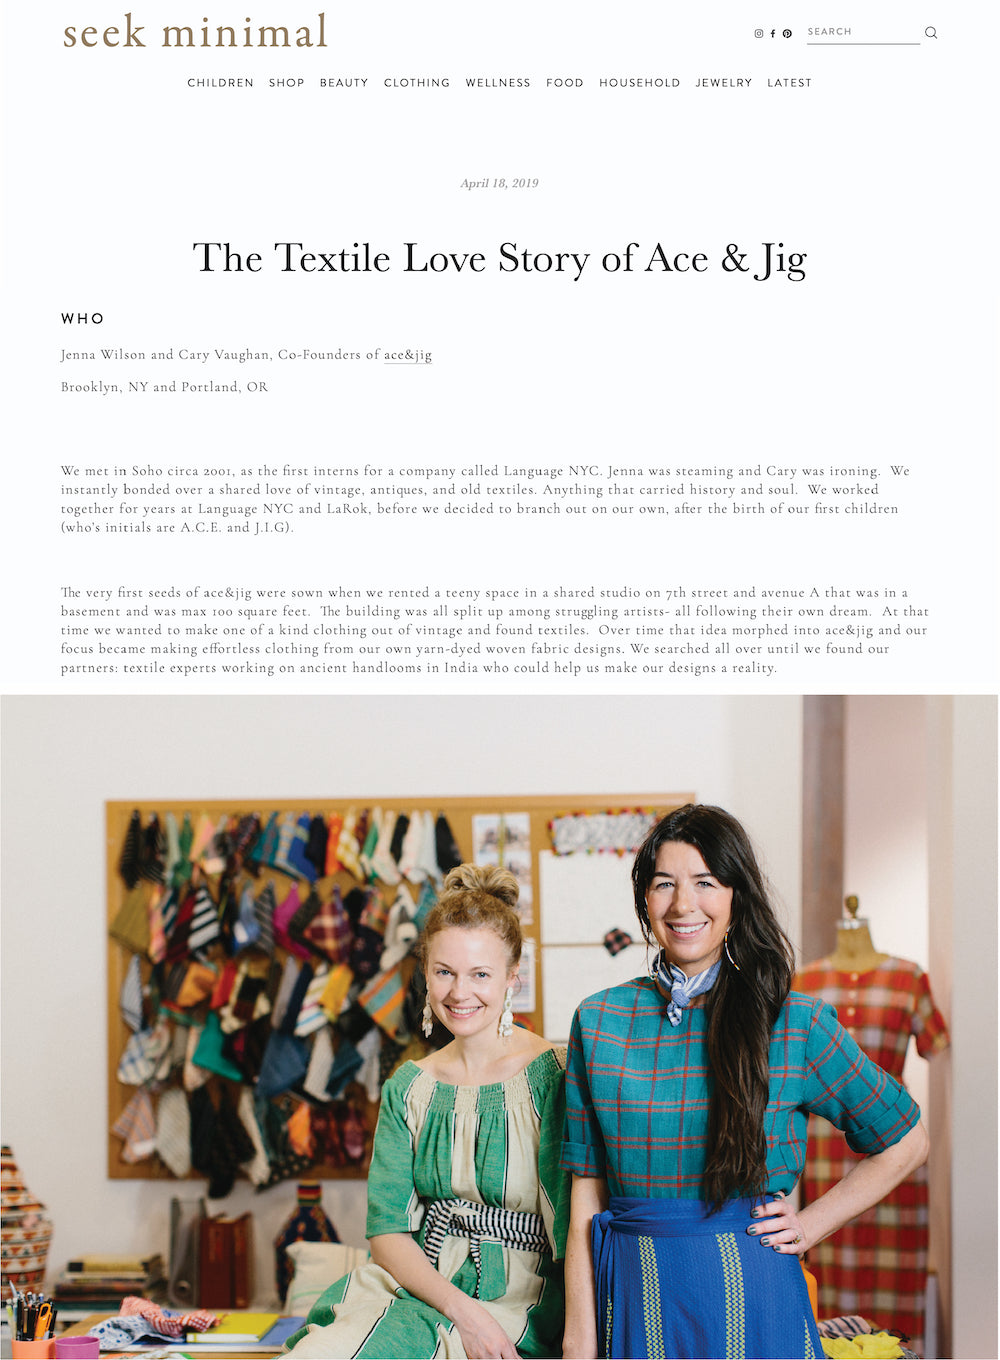 ace&jig featured in seek minimal, april 2019